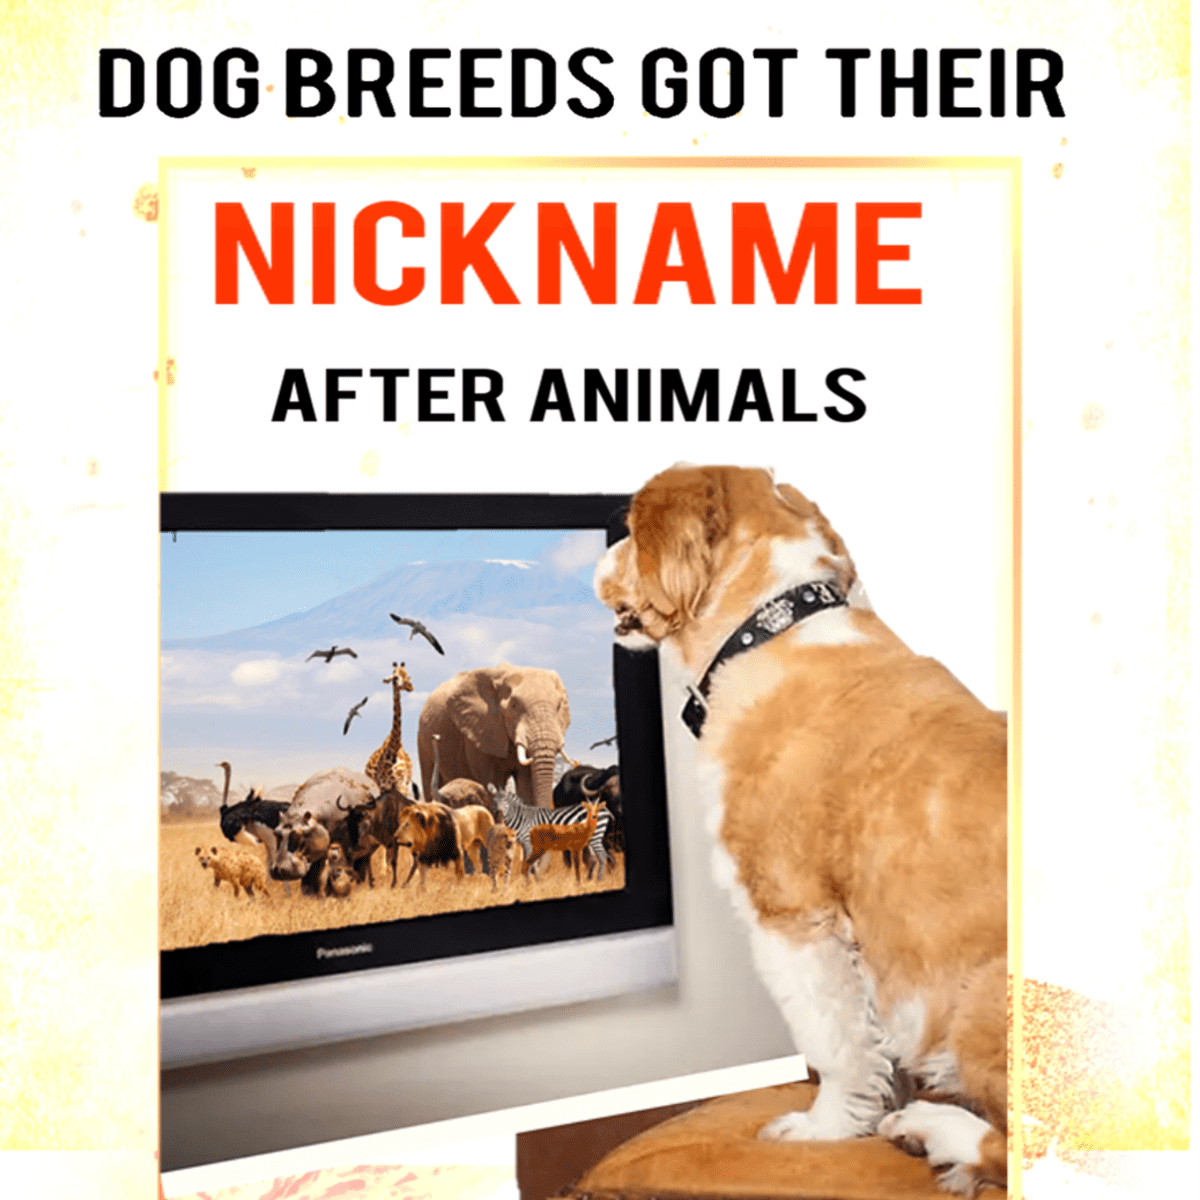 7 Dog Breeds Got their Nickname After Animals - HubPages